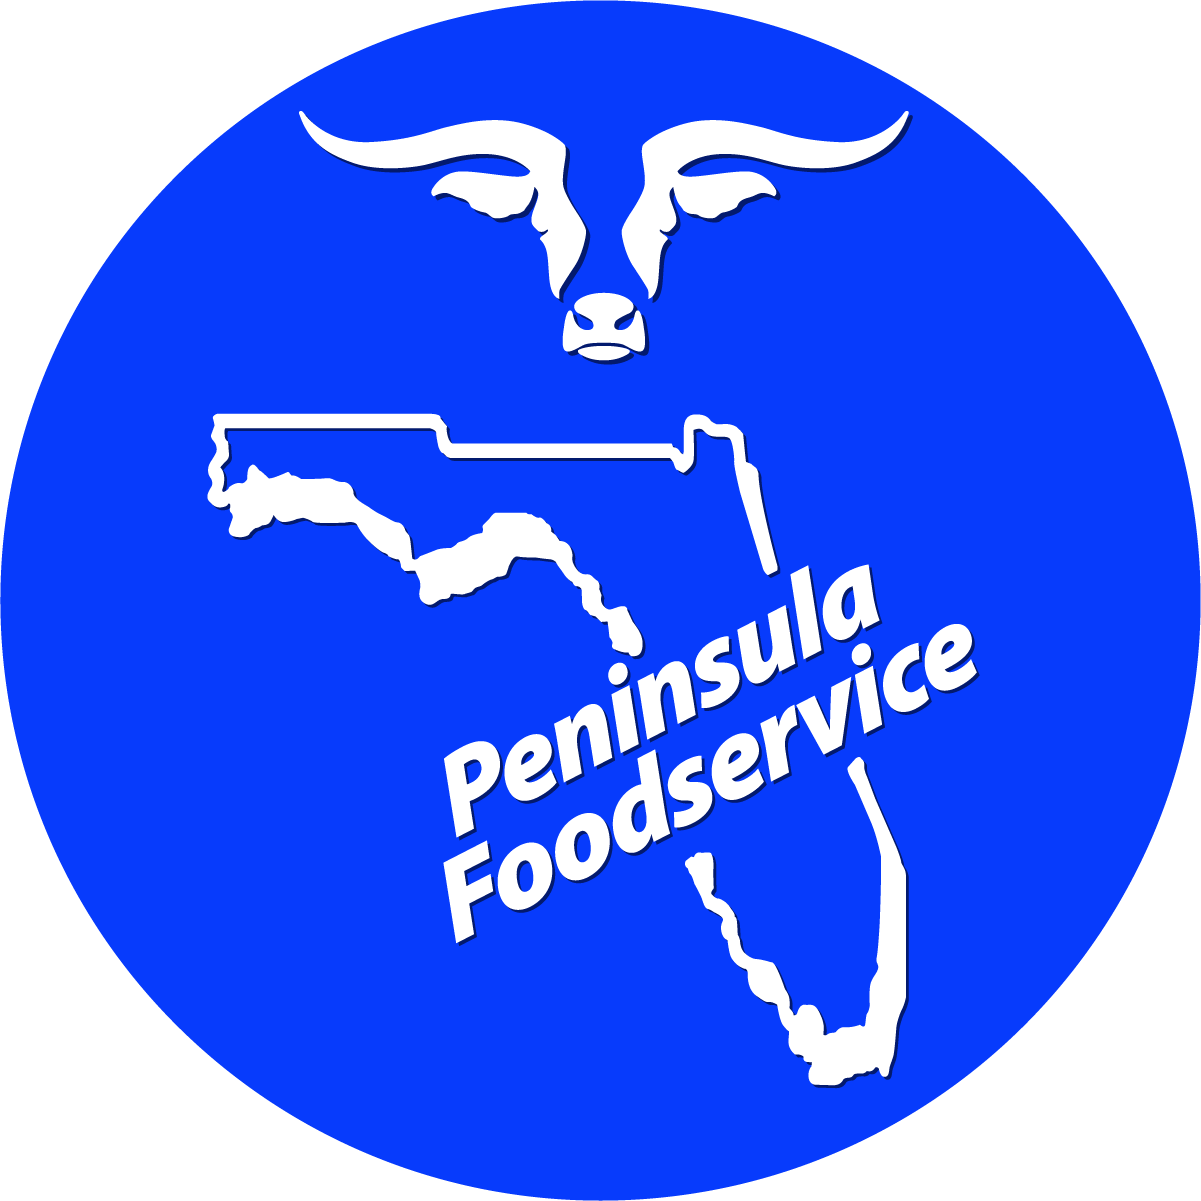 Peninsula Foodservice